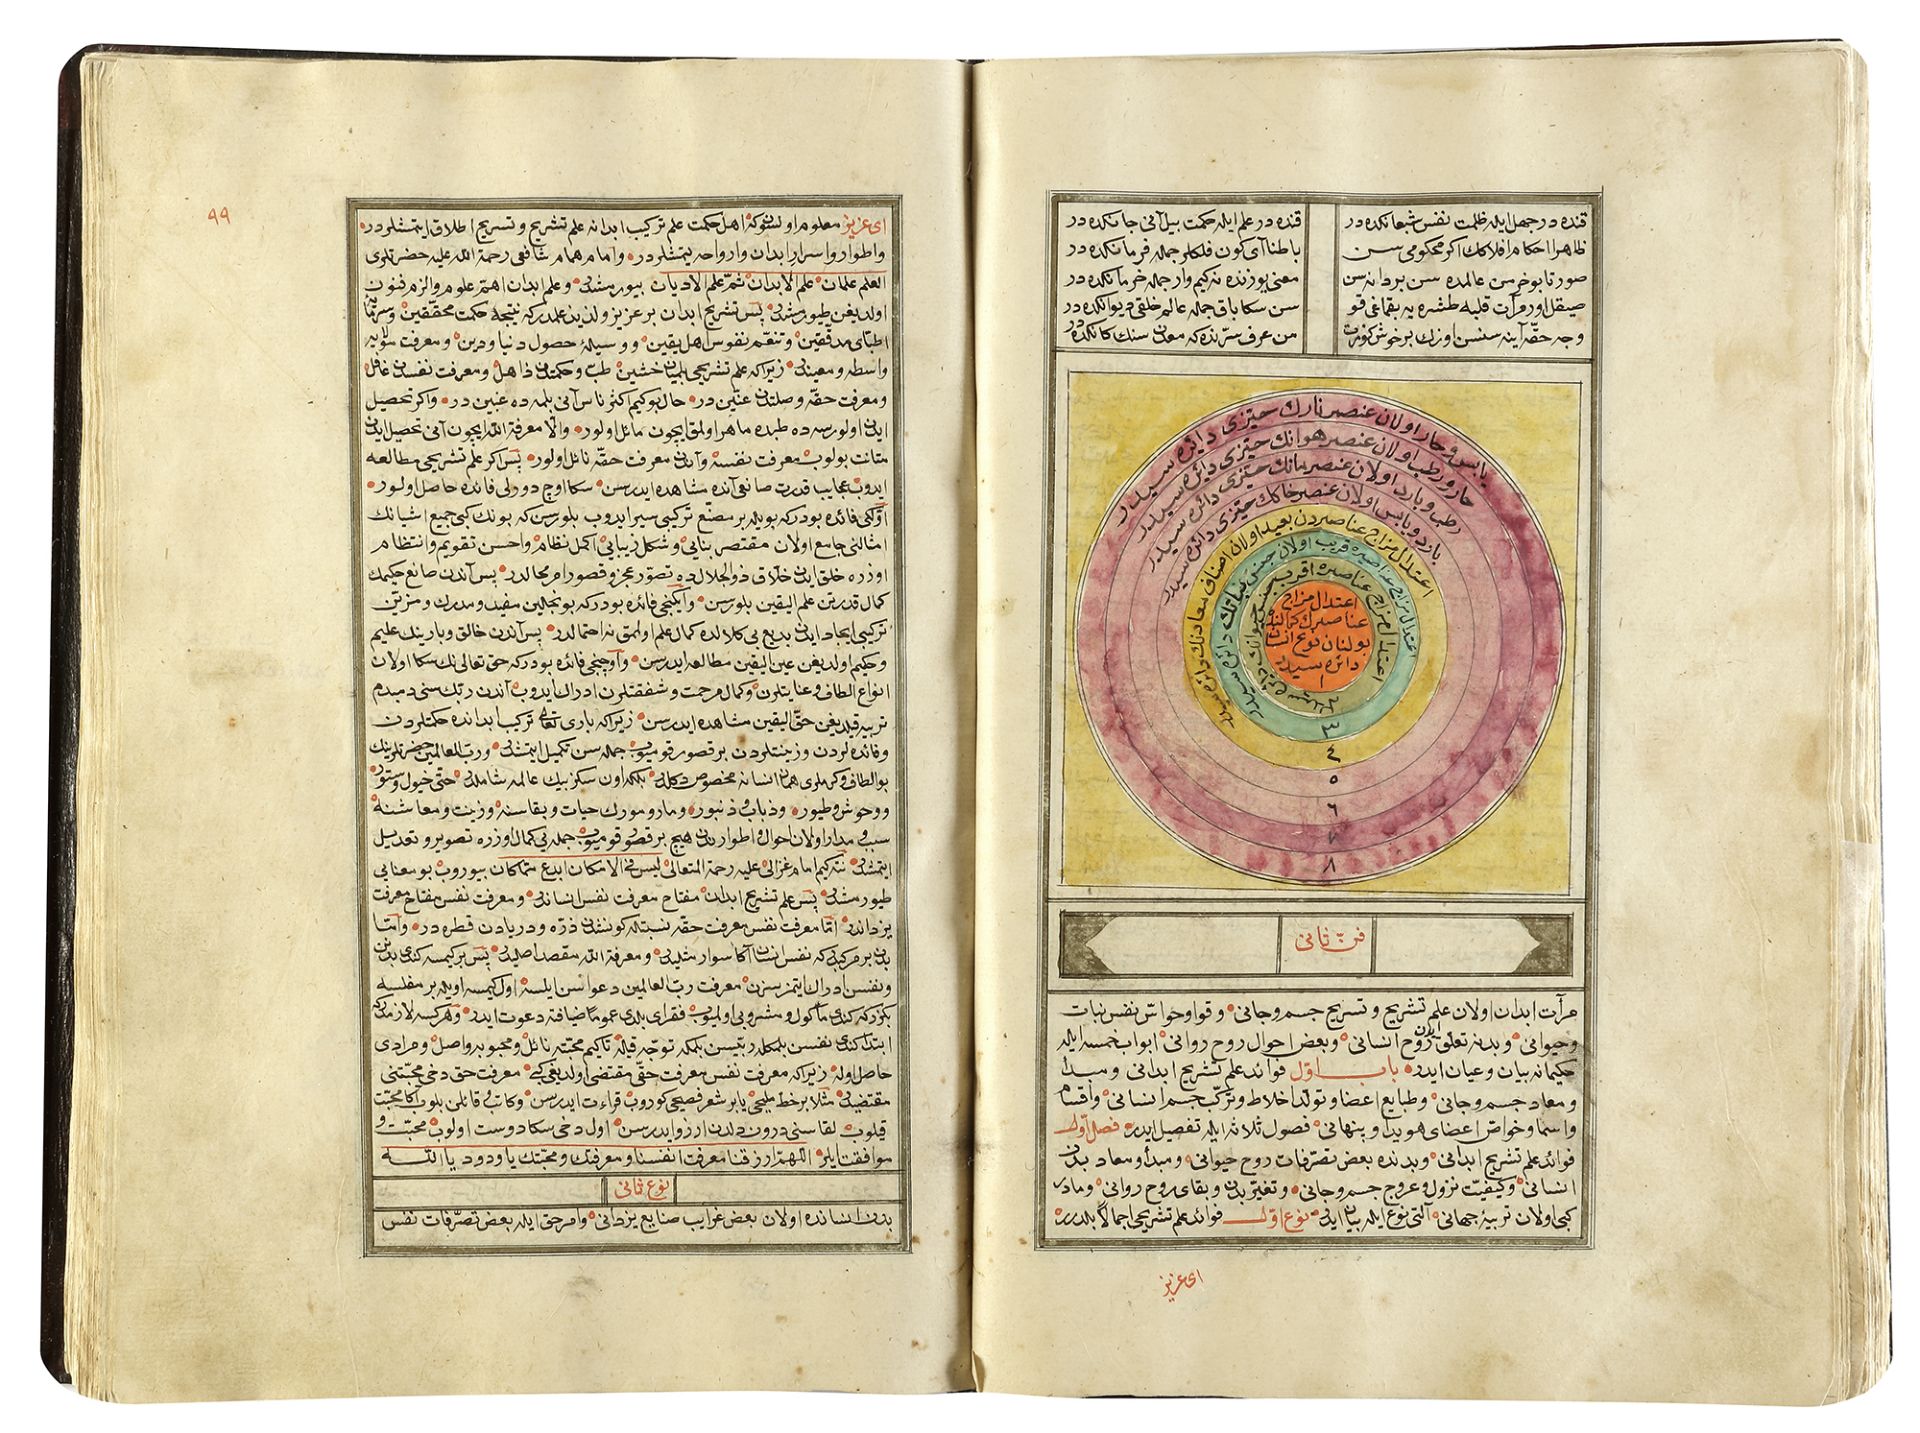 MARIFETNAME, IBRAHIM HAKKI, COPIED BY SAE'D ALLAH BIN ALI BIN AHMED, TURKEY, 1221 AH/1806 AD - Image 52 of 58